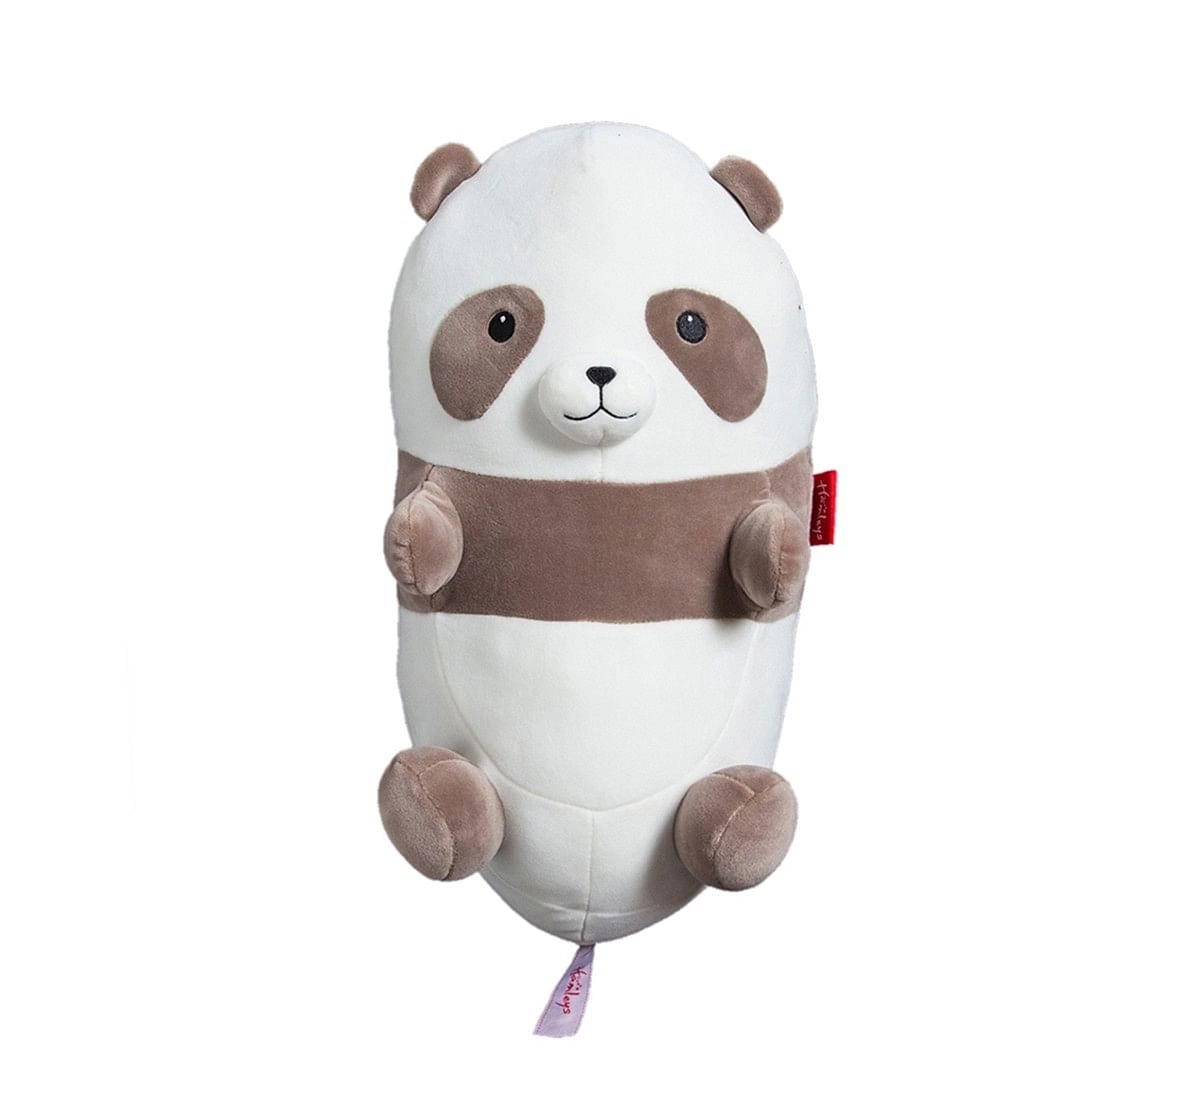  Hamleys Super Soft Plush Snuggle-Ready Panda Quirky Soft Toys for Kids age 0M+ - 36 Cm 